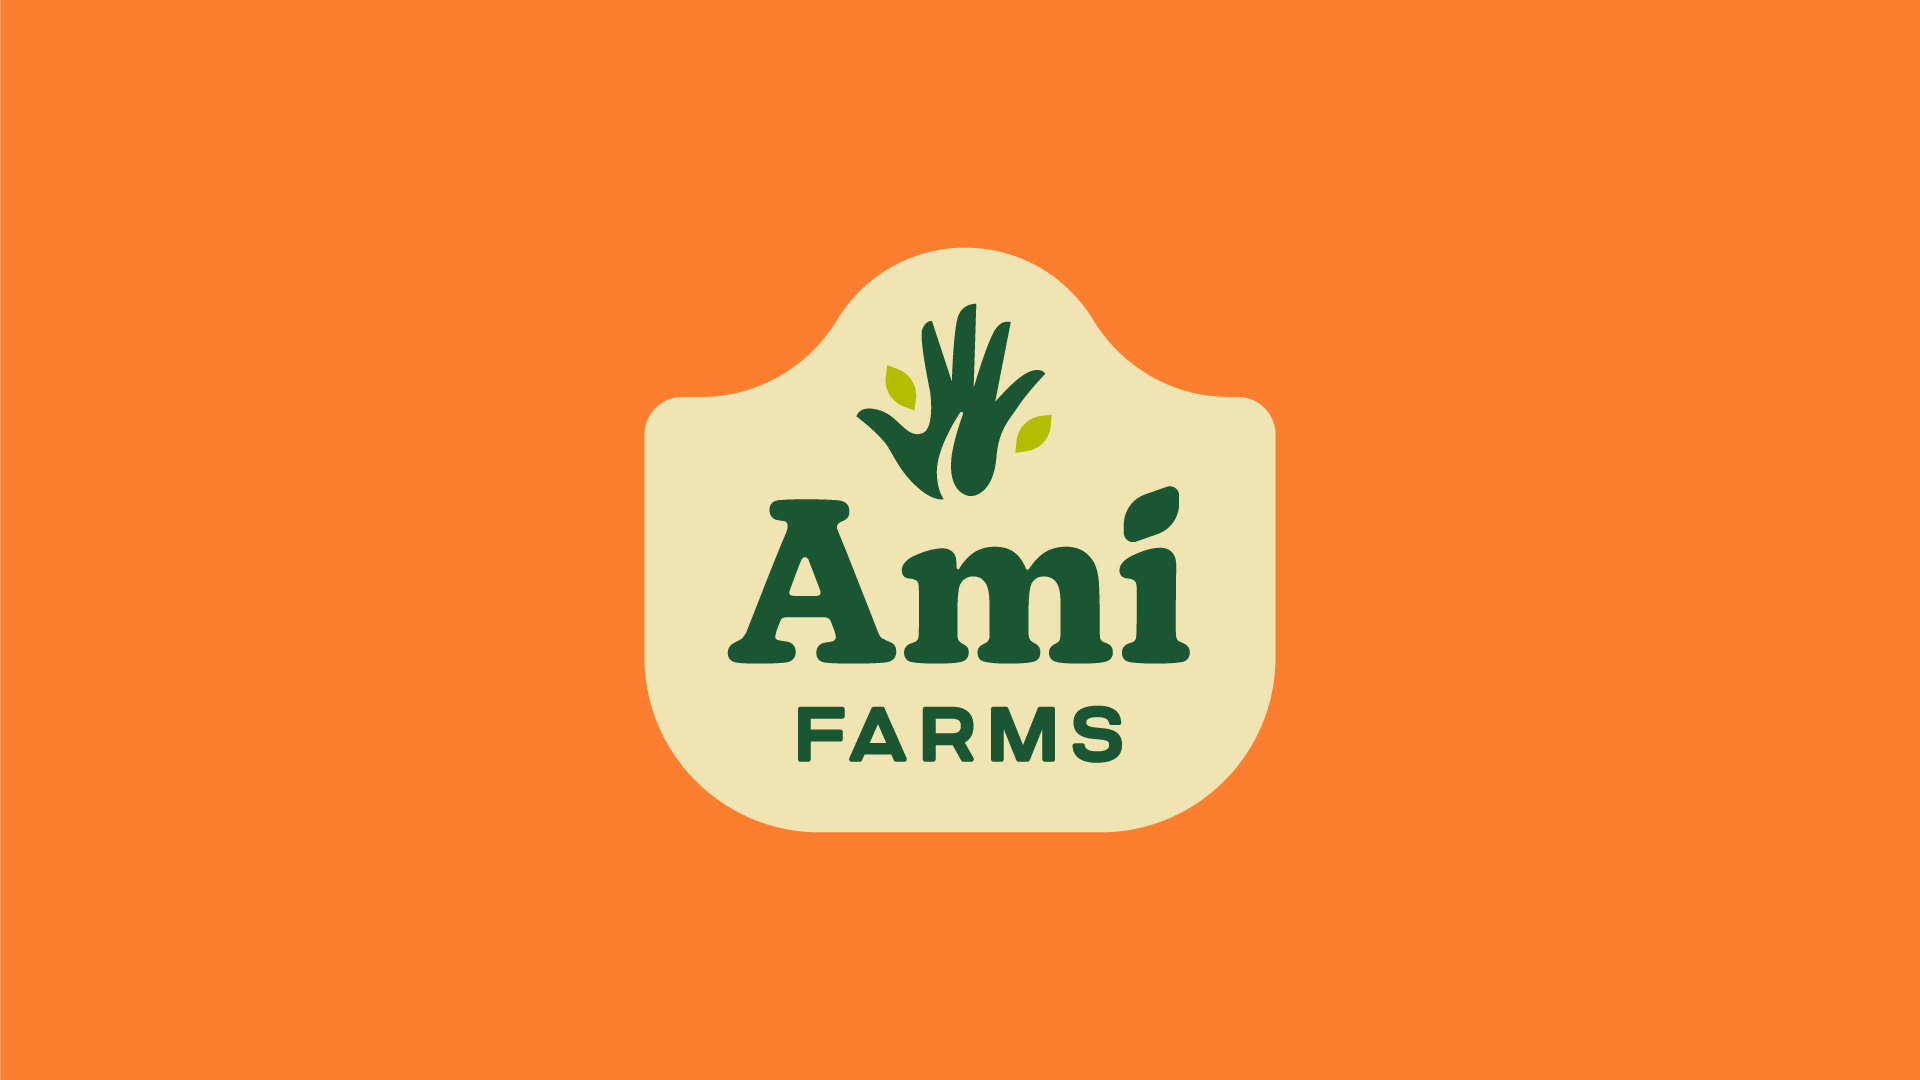 Warm friendly minimal logo icon and logo type design for bidynamic farm and brand Ami Farms